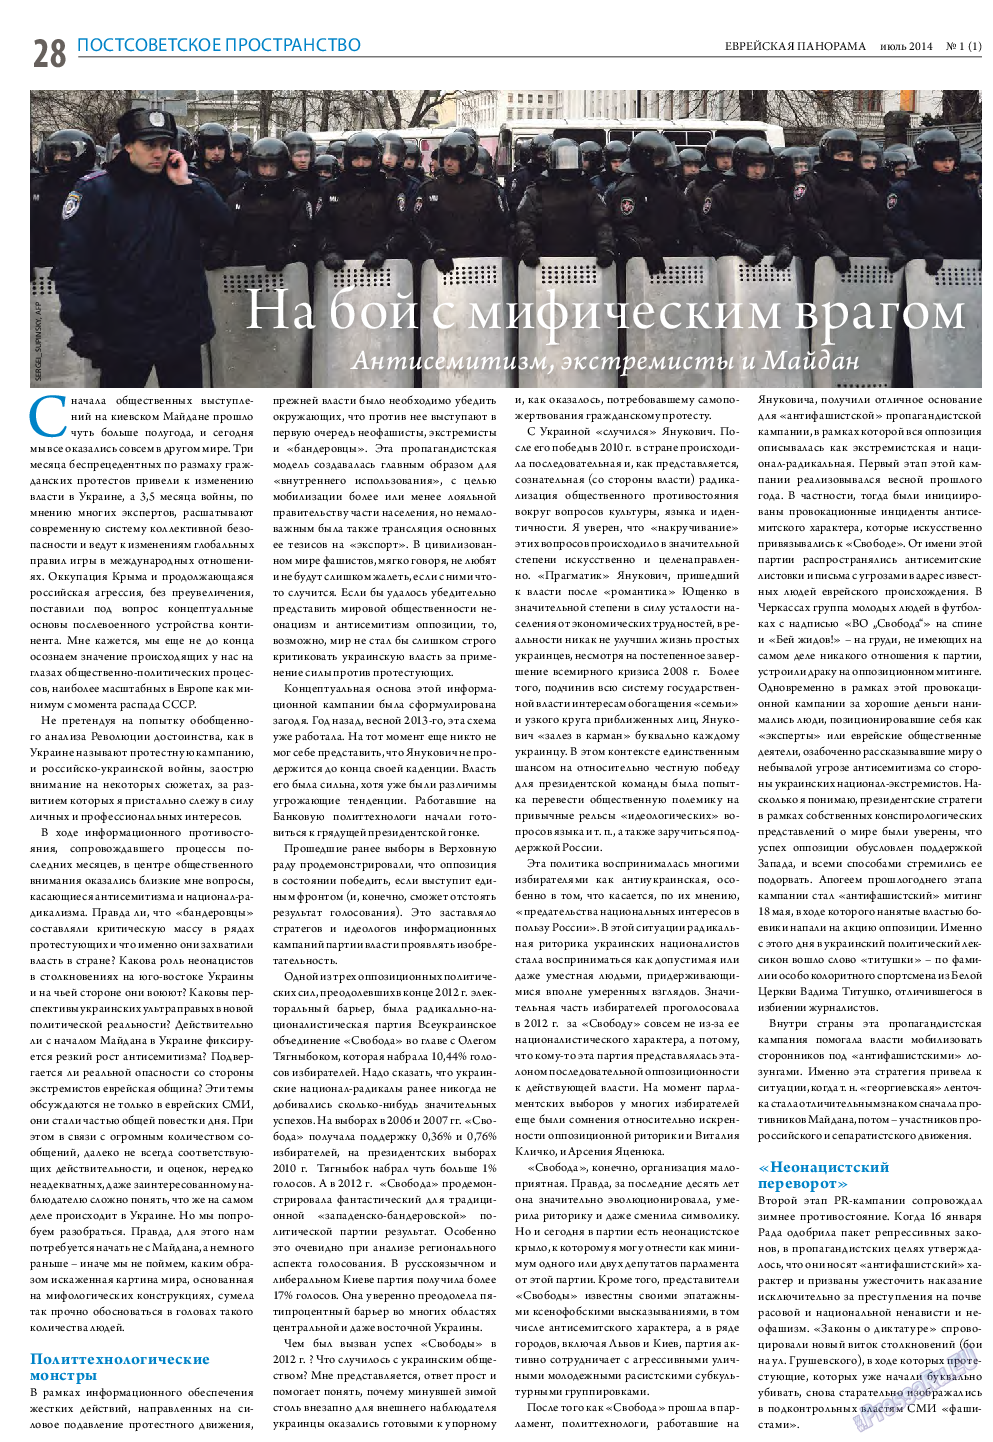 Еврейская панорама, газета. 2014 №1 стр.28